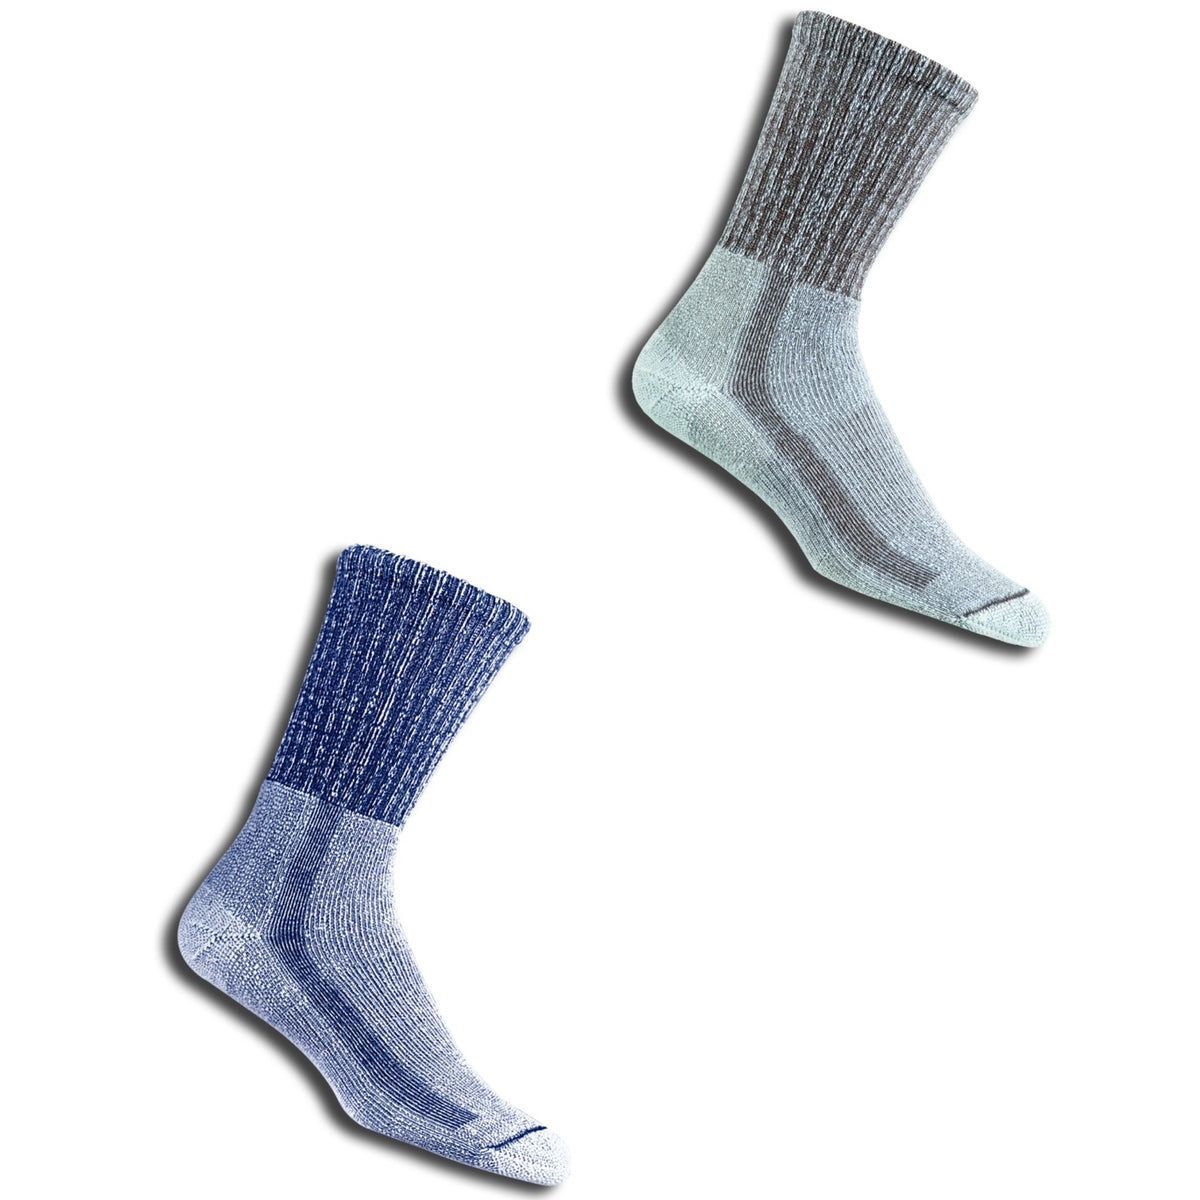 Thorlo LTH Hiking Socks - Men's